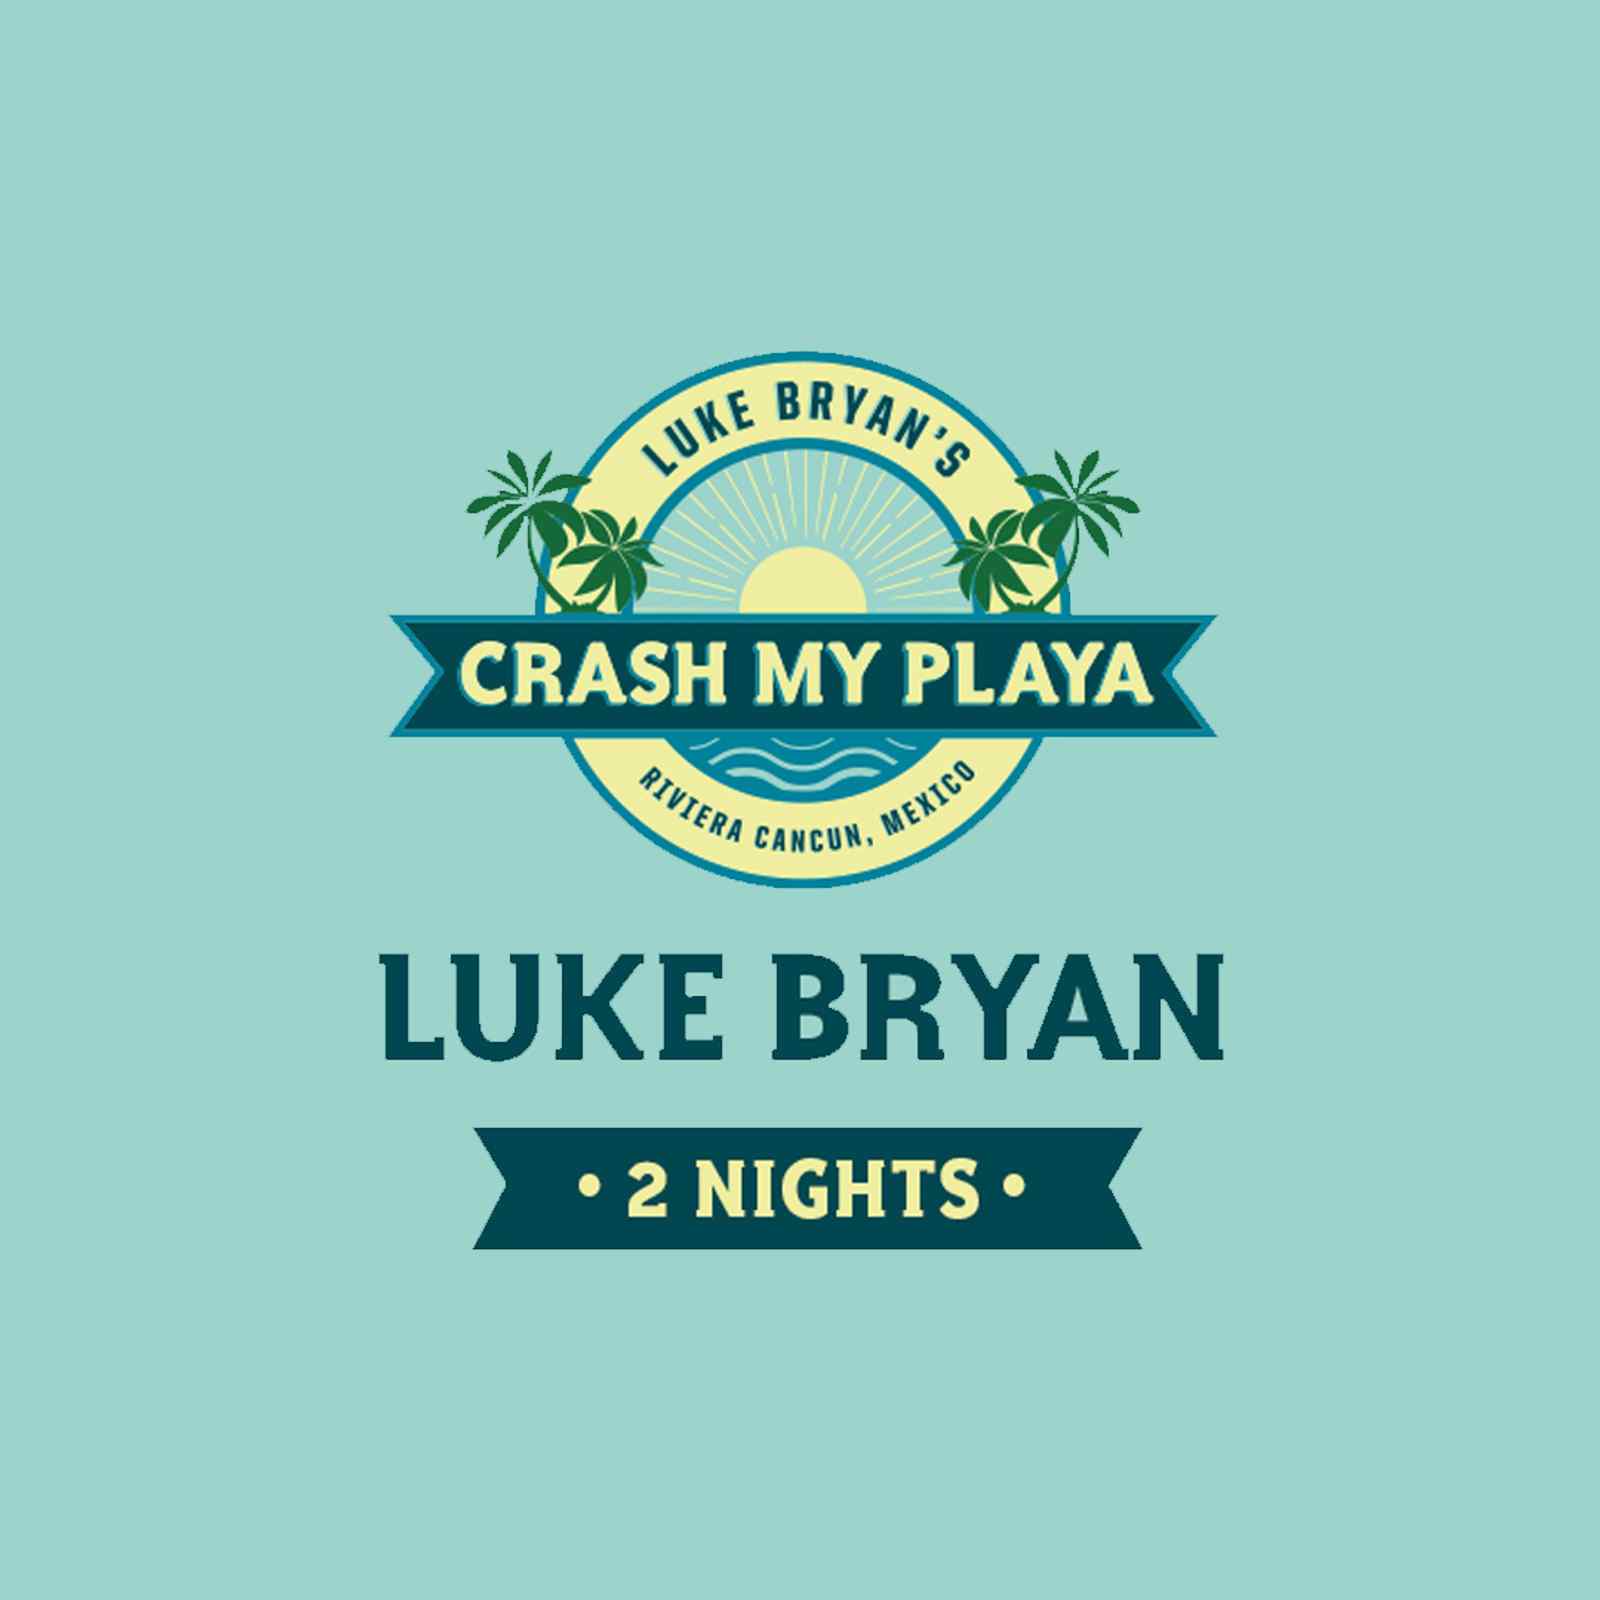 Luke Bryan’s Crash My Playa Set For January 19-22, 2022